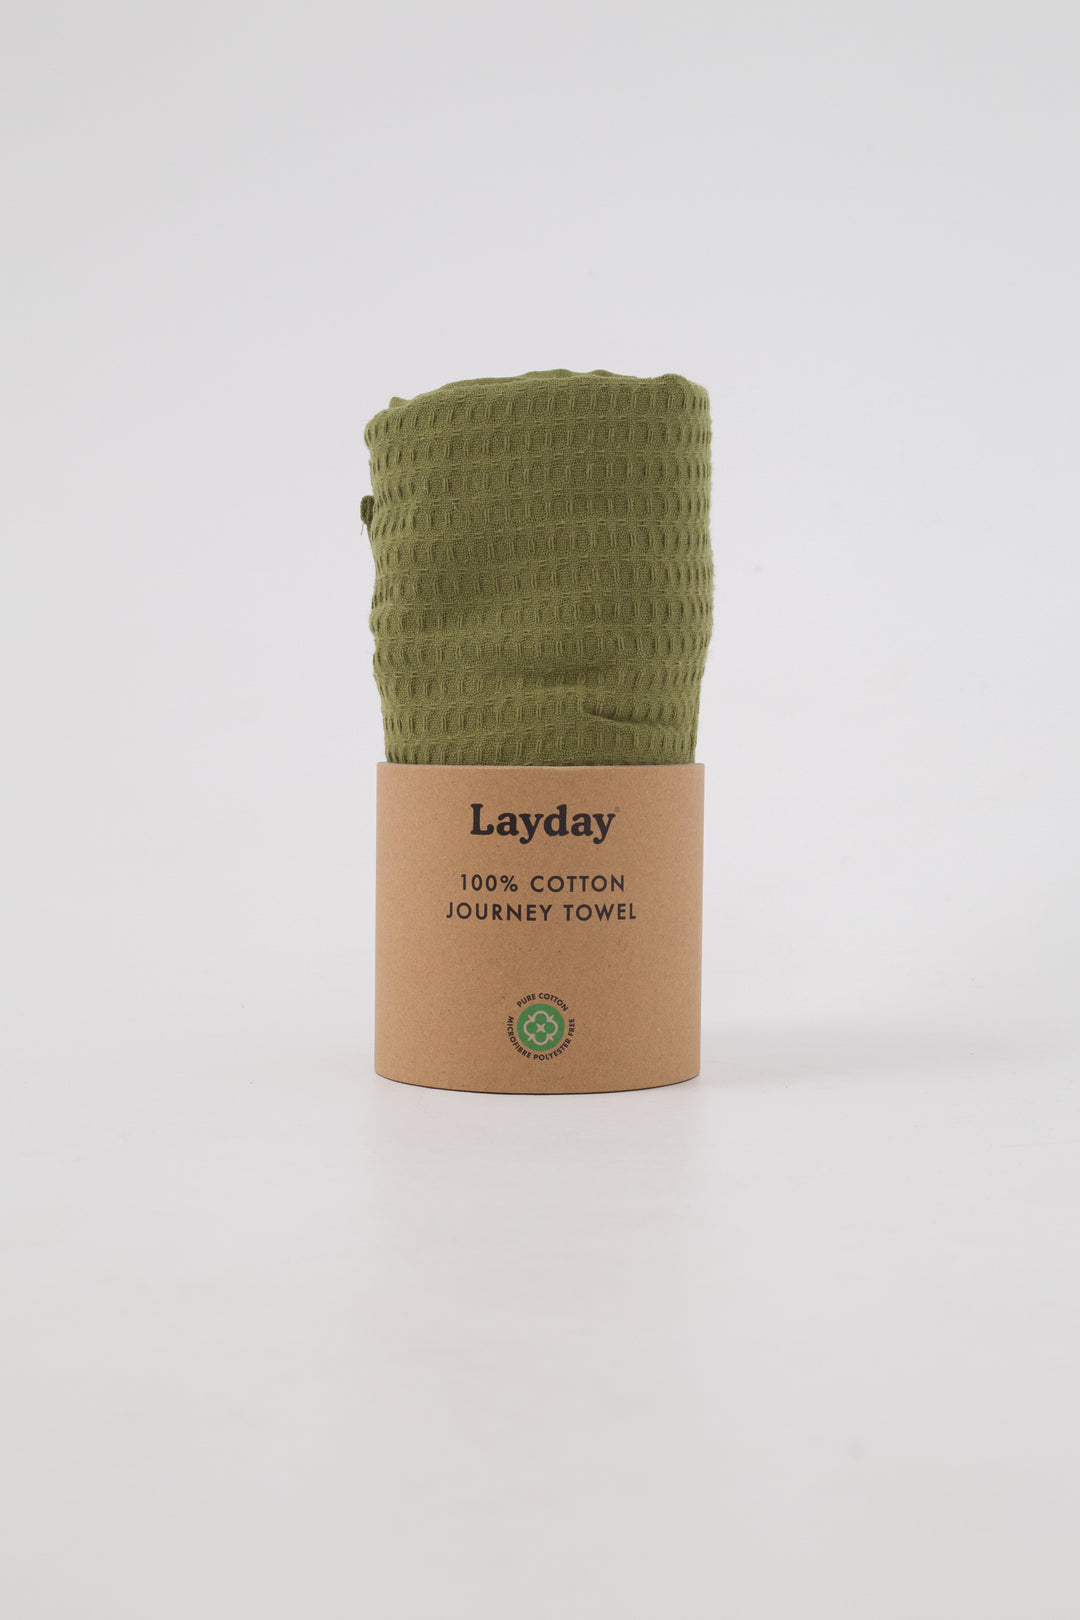 Layday Journey Rover Towel